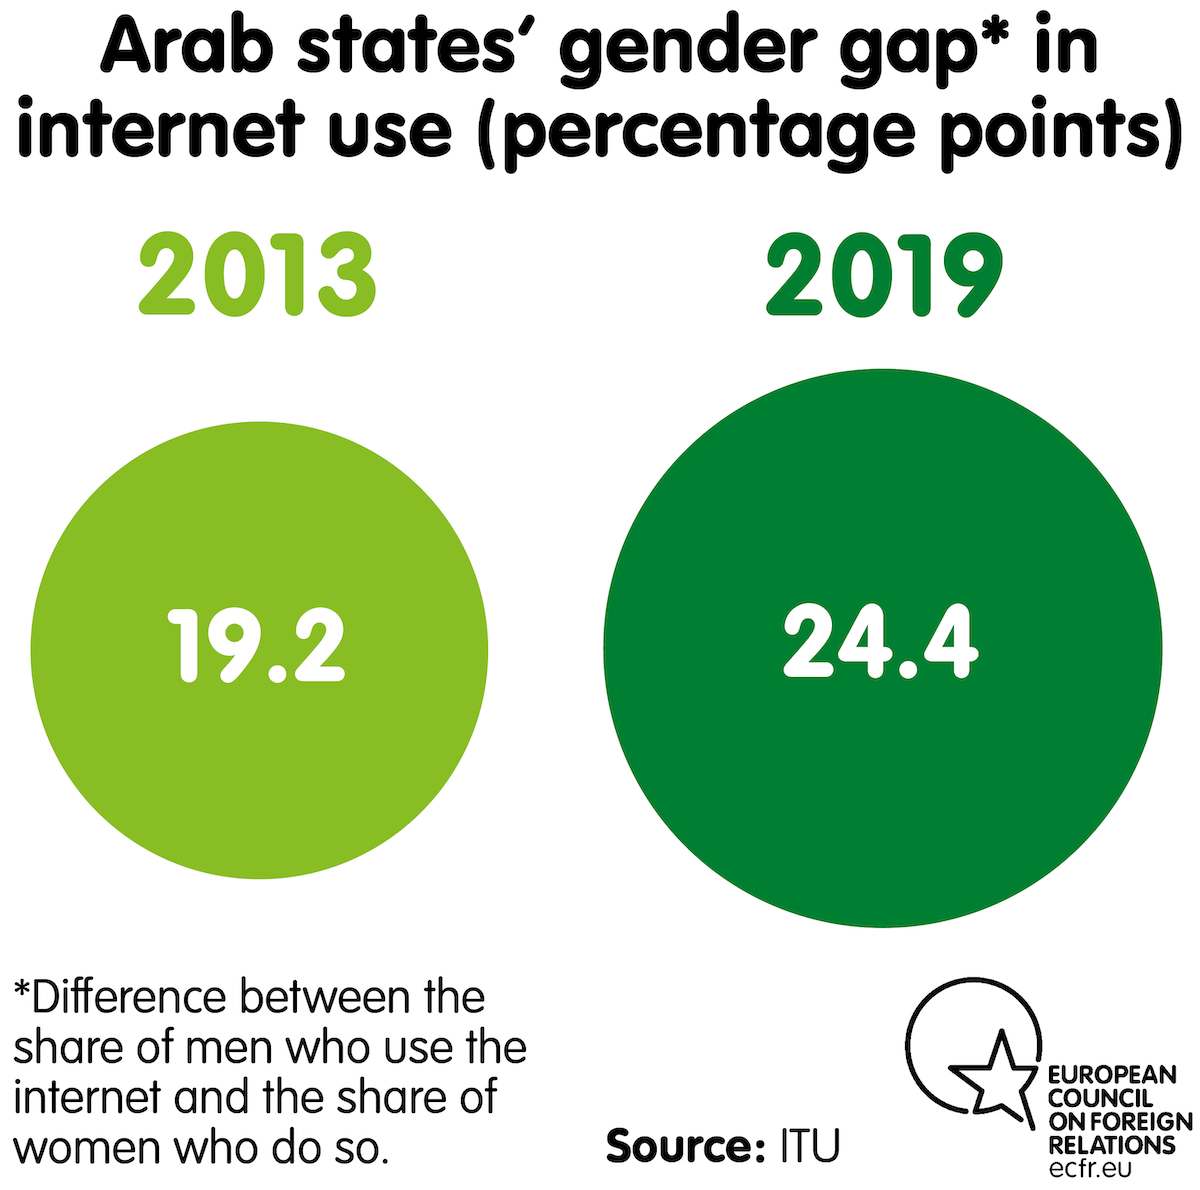 Arab states' gender gap in internet use (percentage points)